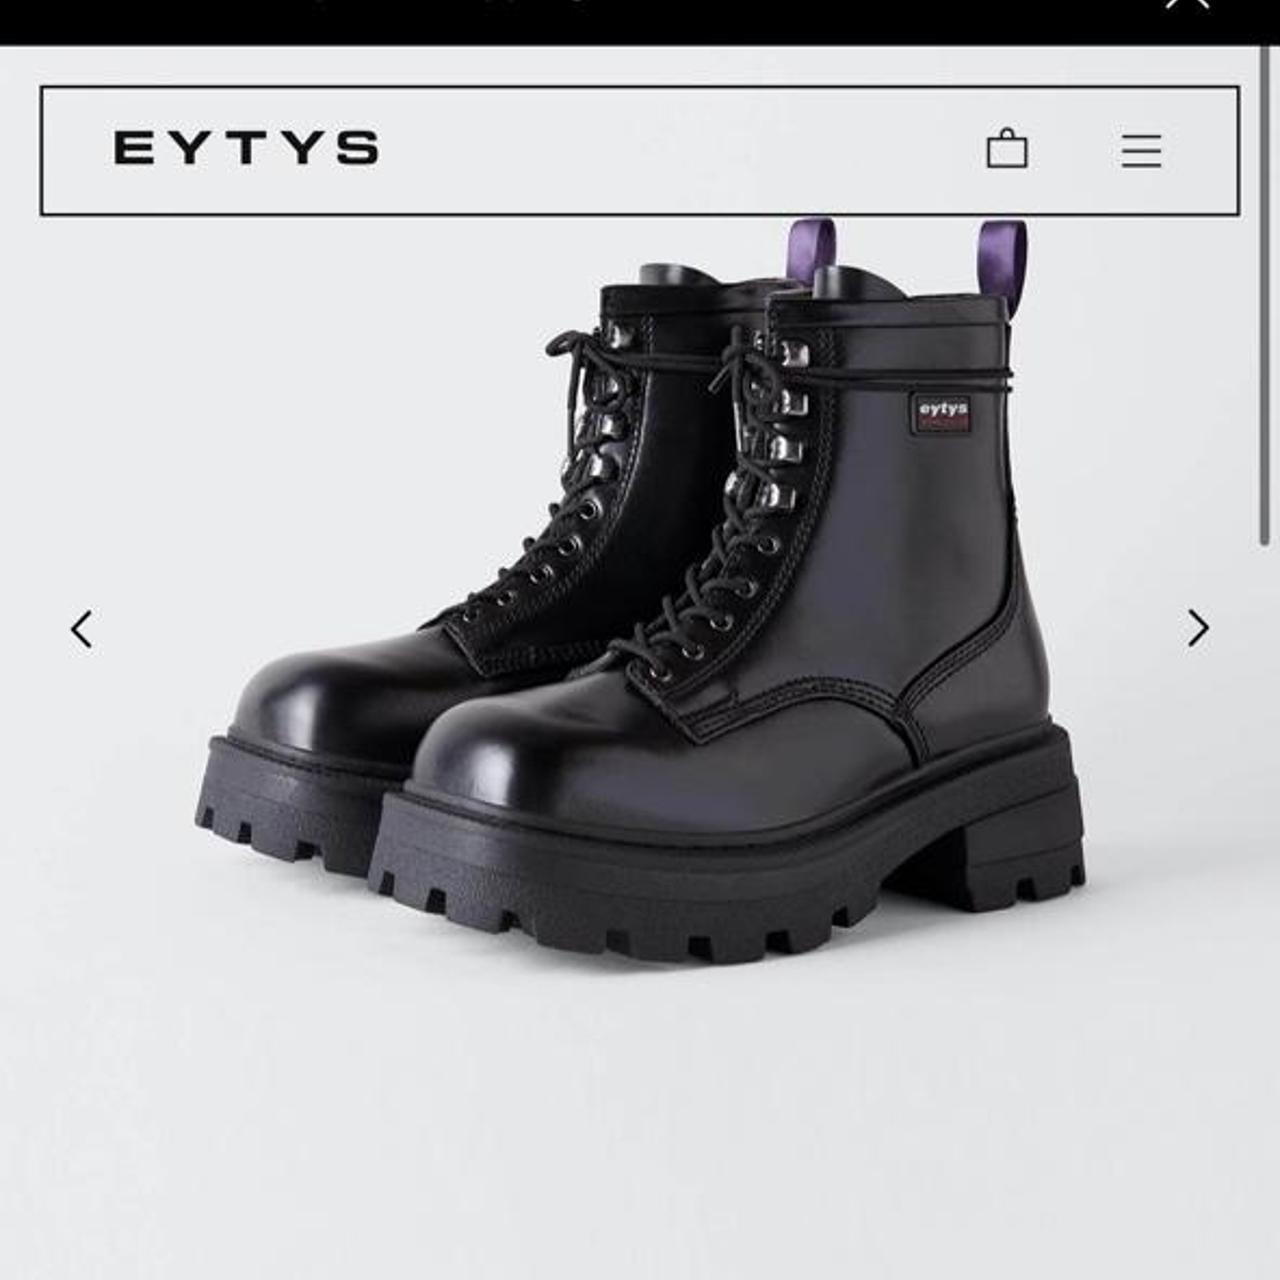 Eytys michigan boots, originally $380 USD, minor - Depop